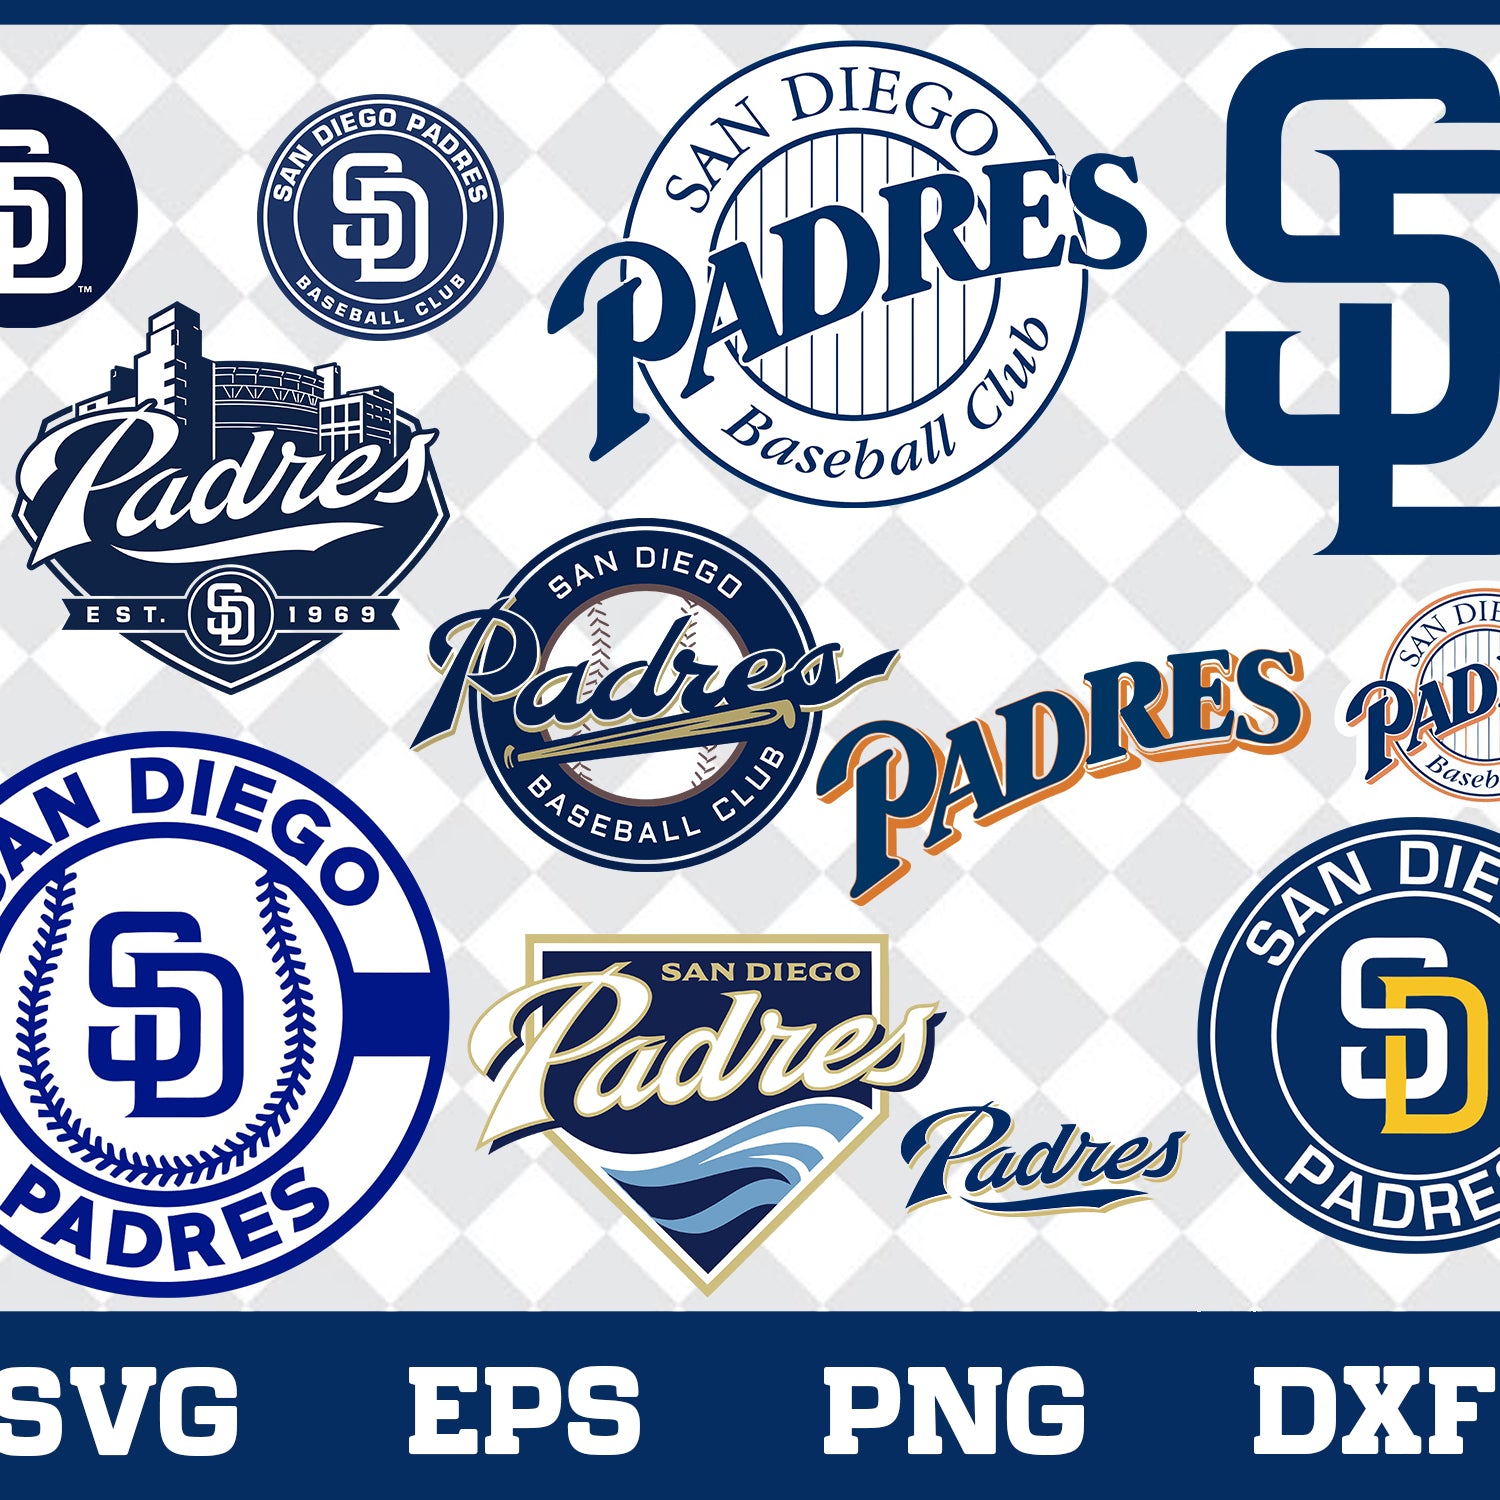 San Diego Padres Bundle svg, San Diego Padres svg, Padres svg, Padres svg for cut, png, dxf, eps digital file MBL30012123